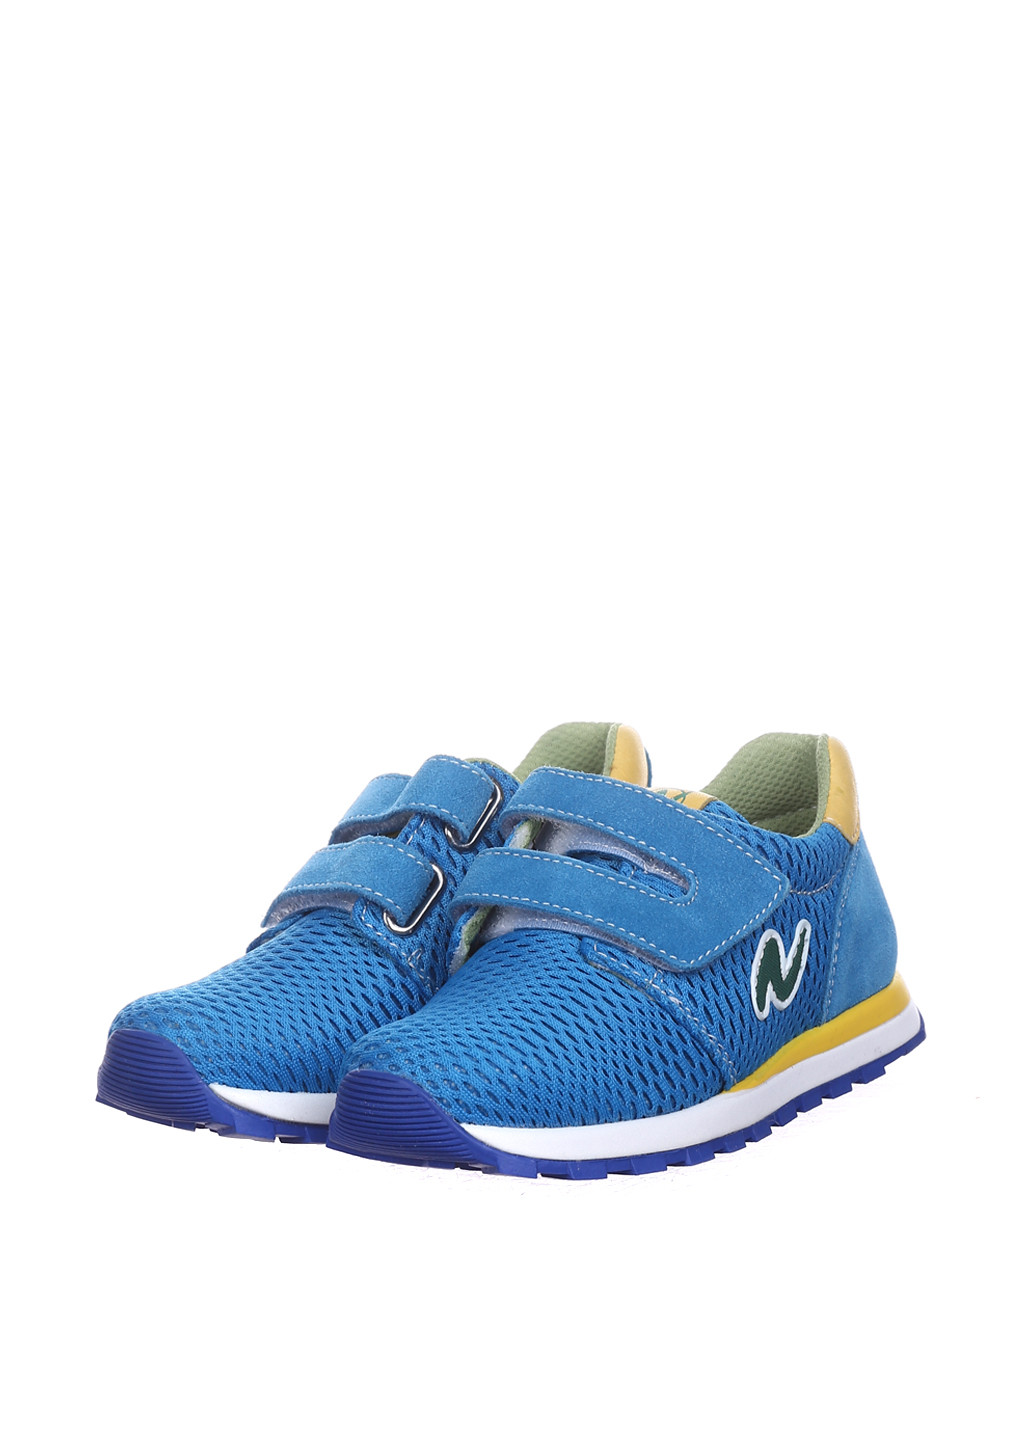 Синие демисезонные кроссовки Naturino